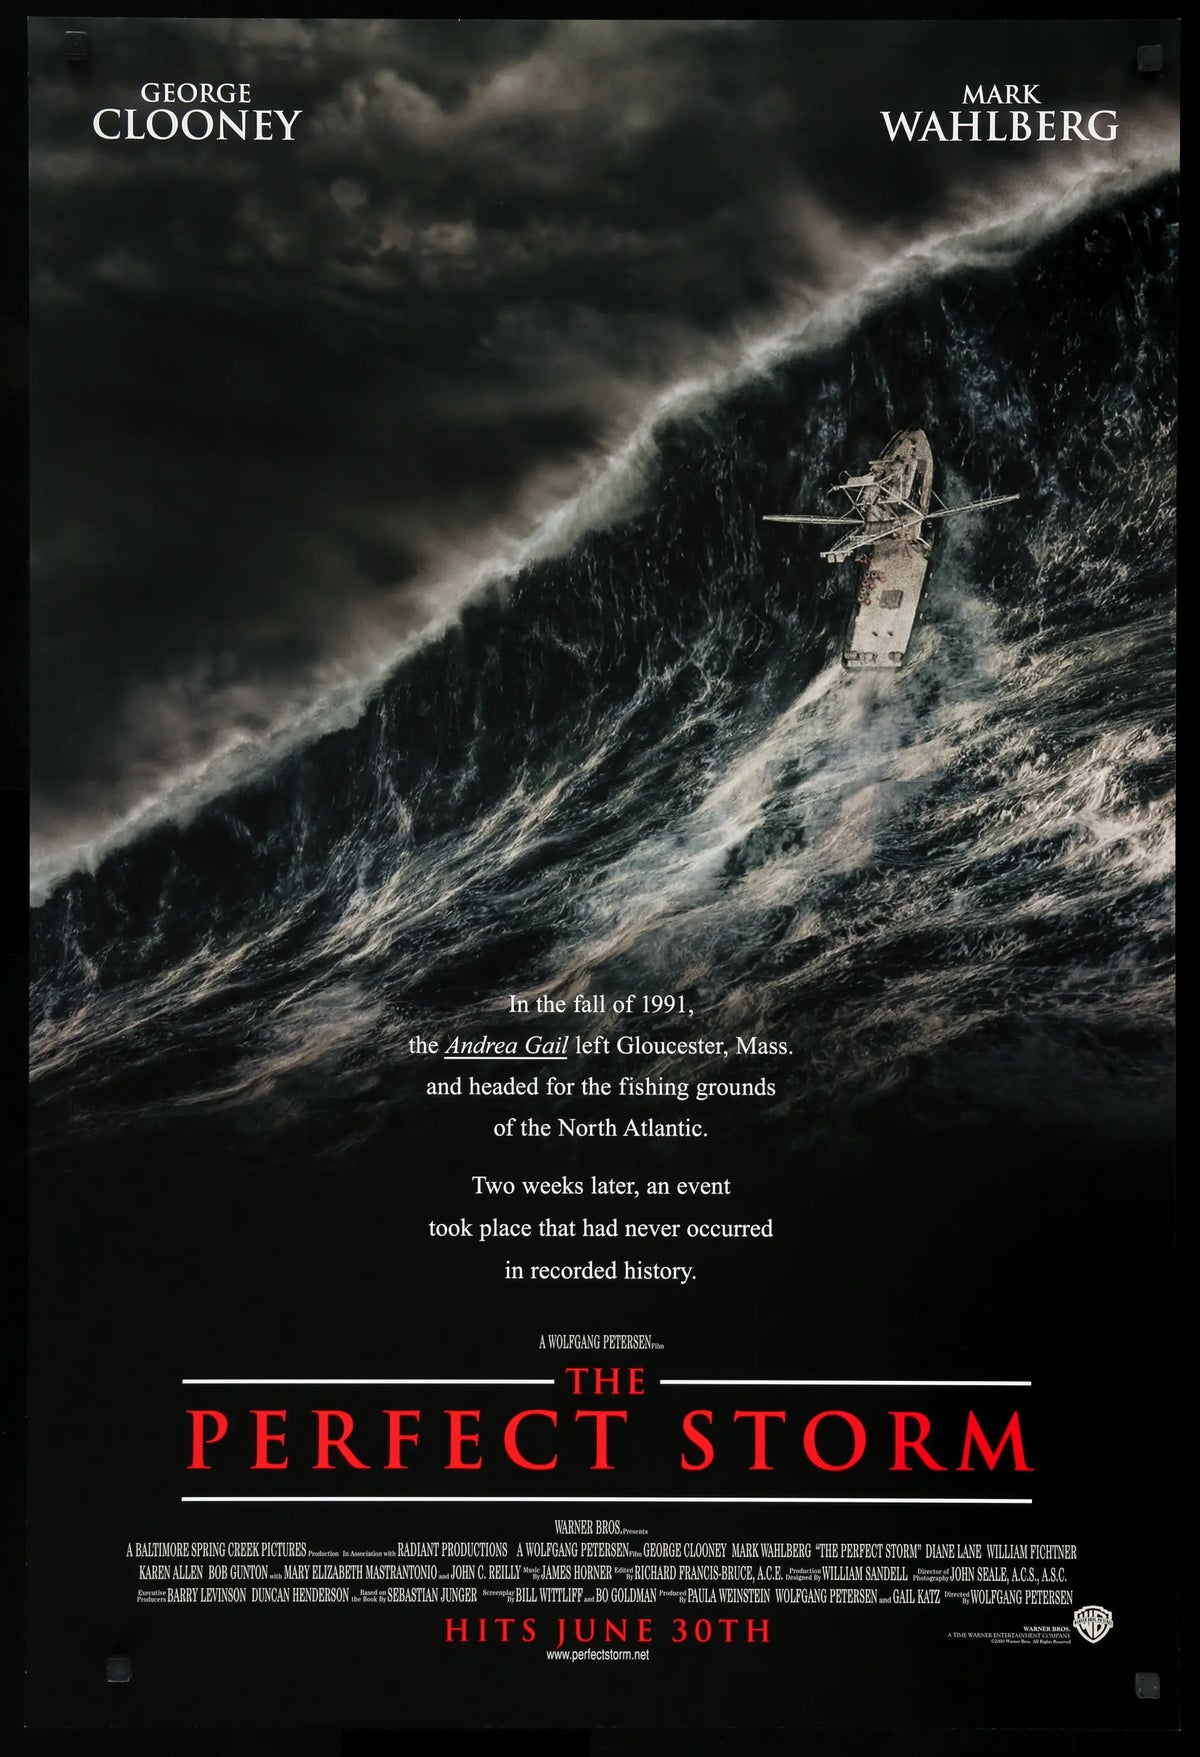 Perfect Storm (2000) original movie poster for sale at Original Film Art